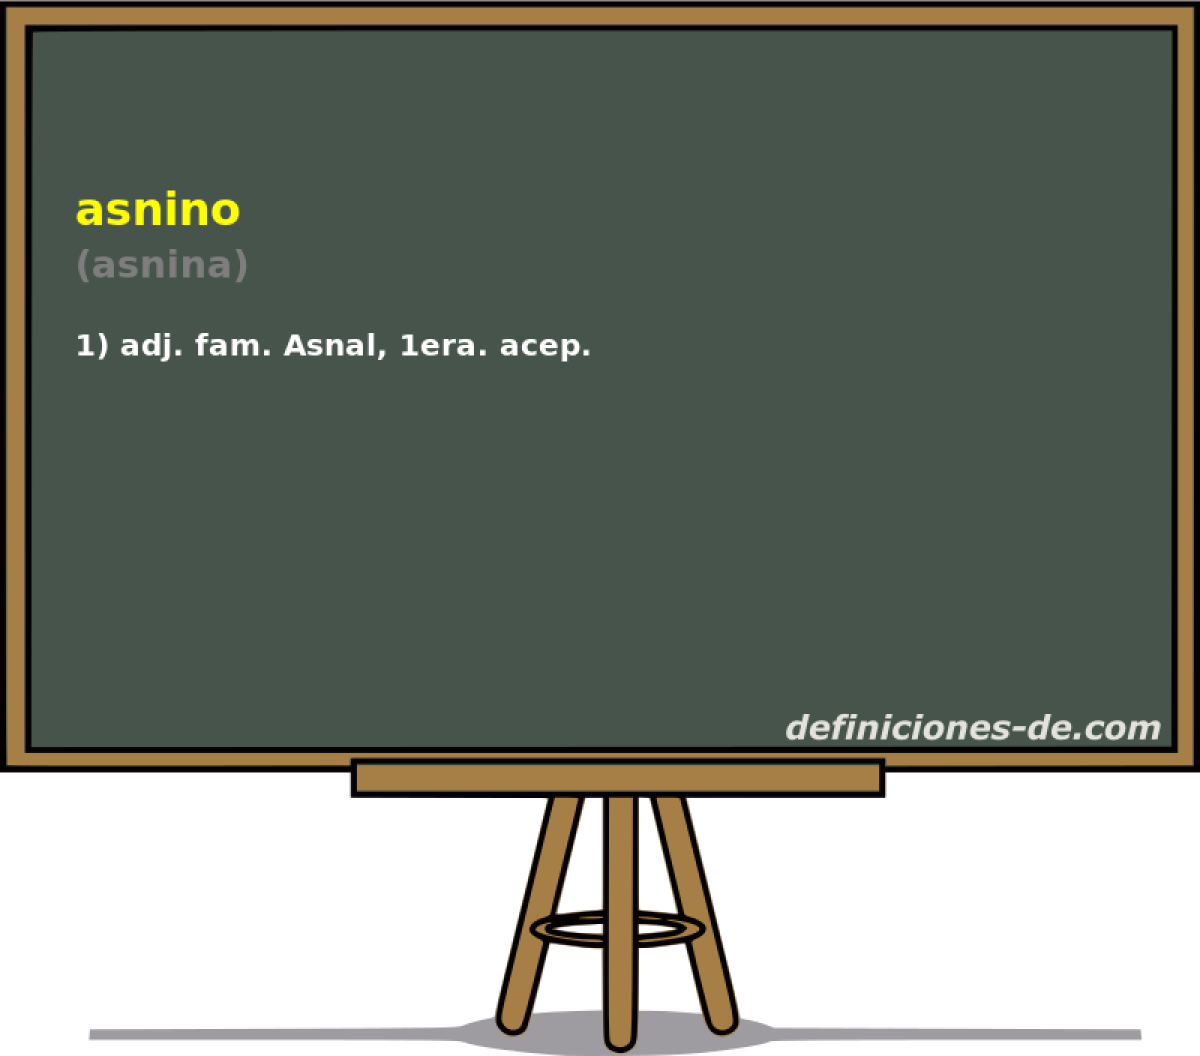 asnino (asnina)